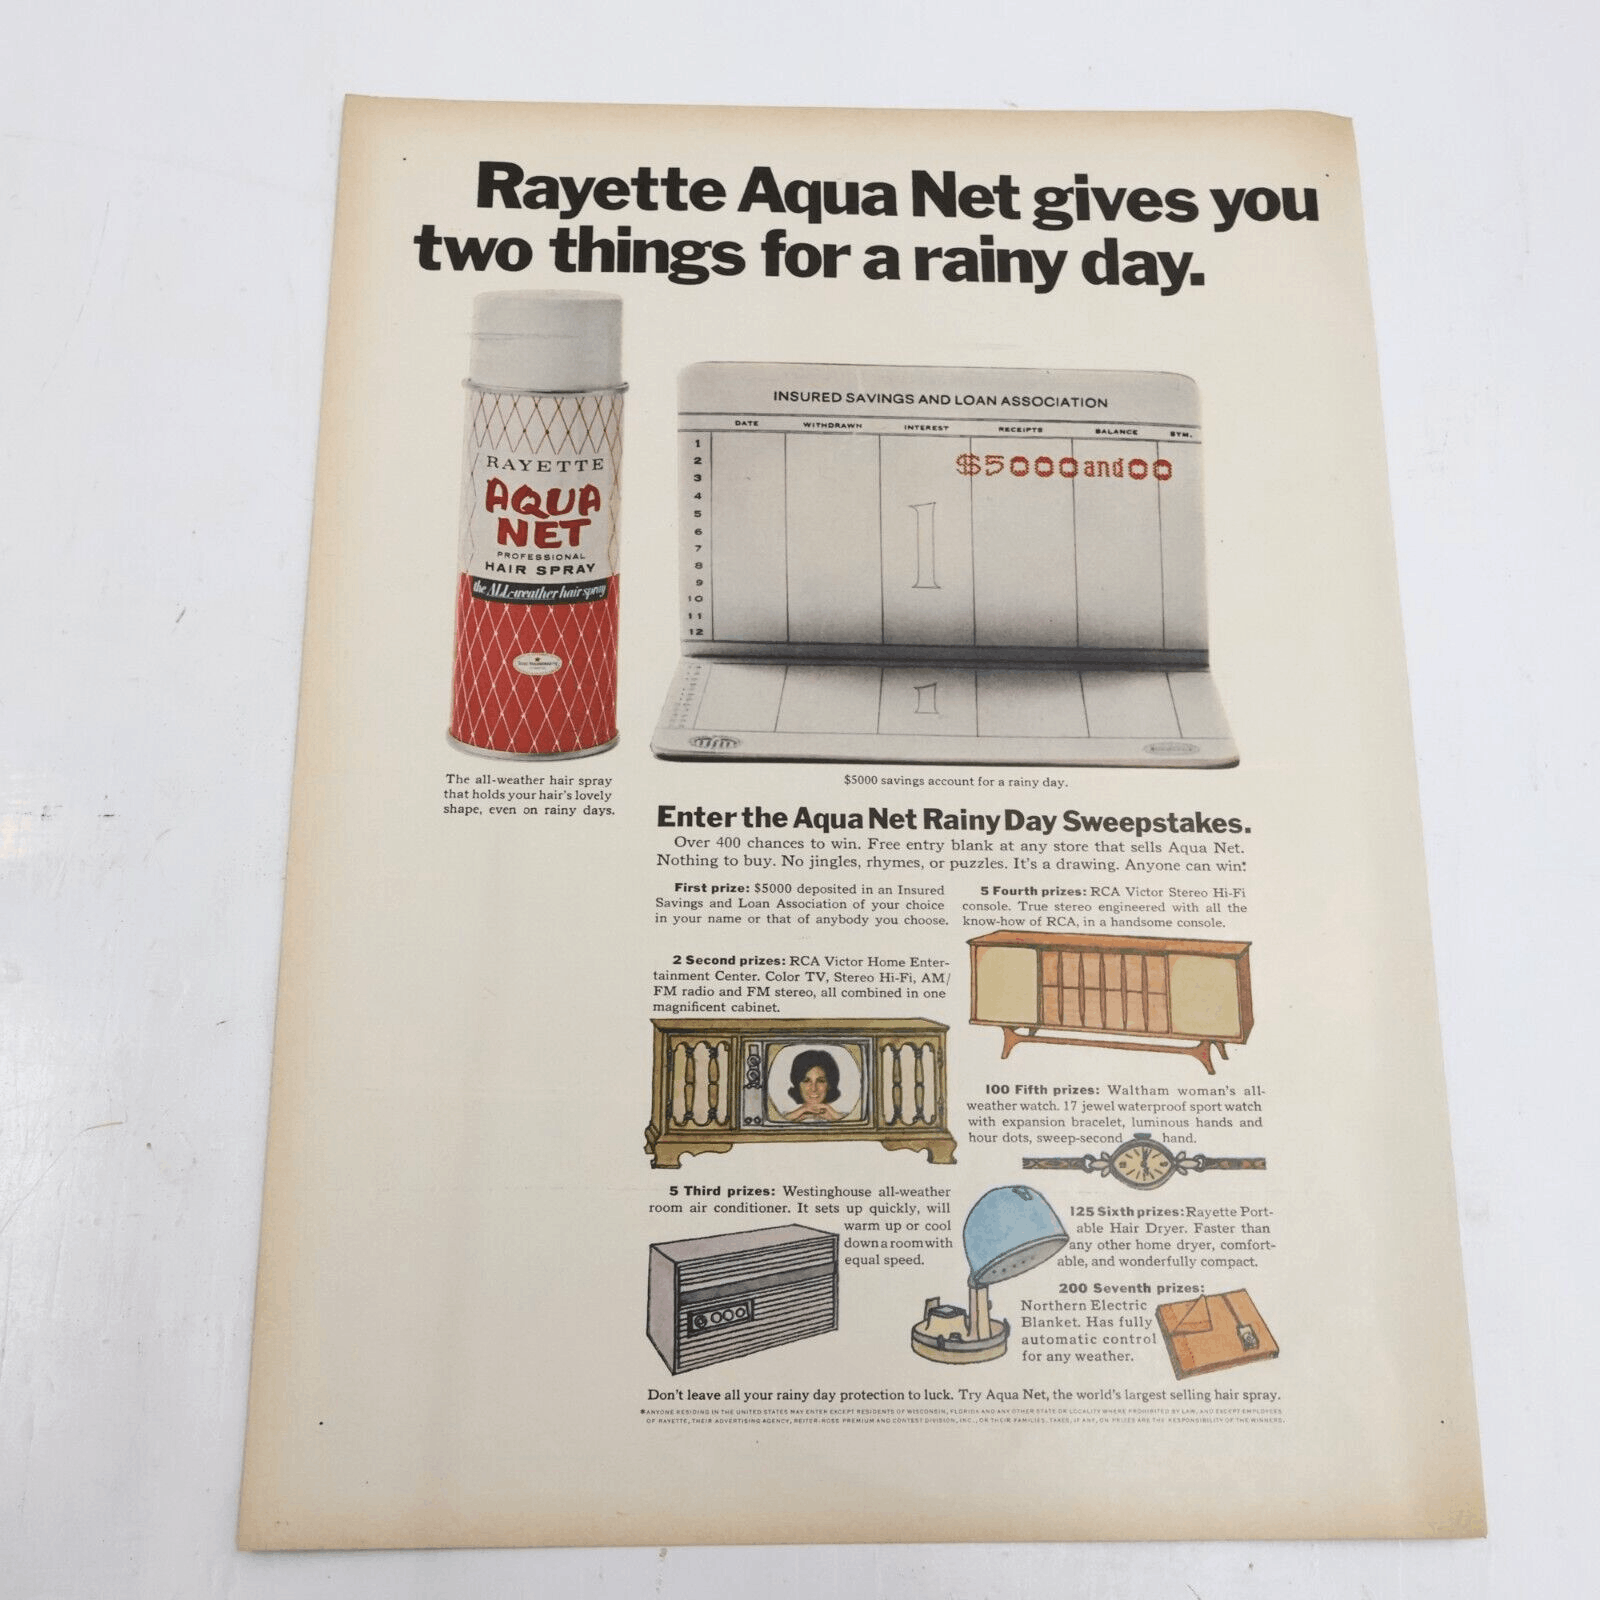 1964 Rayette Aqua Net Professional Hair Spray For a Rainy Day Print Ad  10.5x13.5